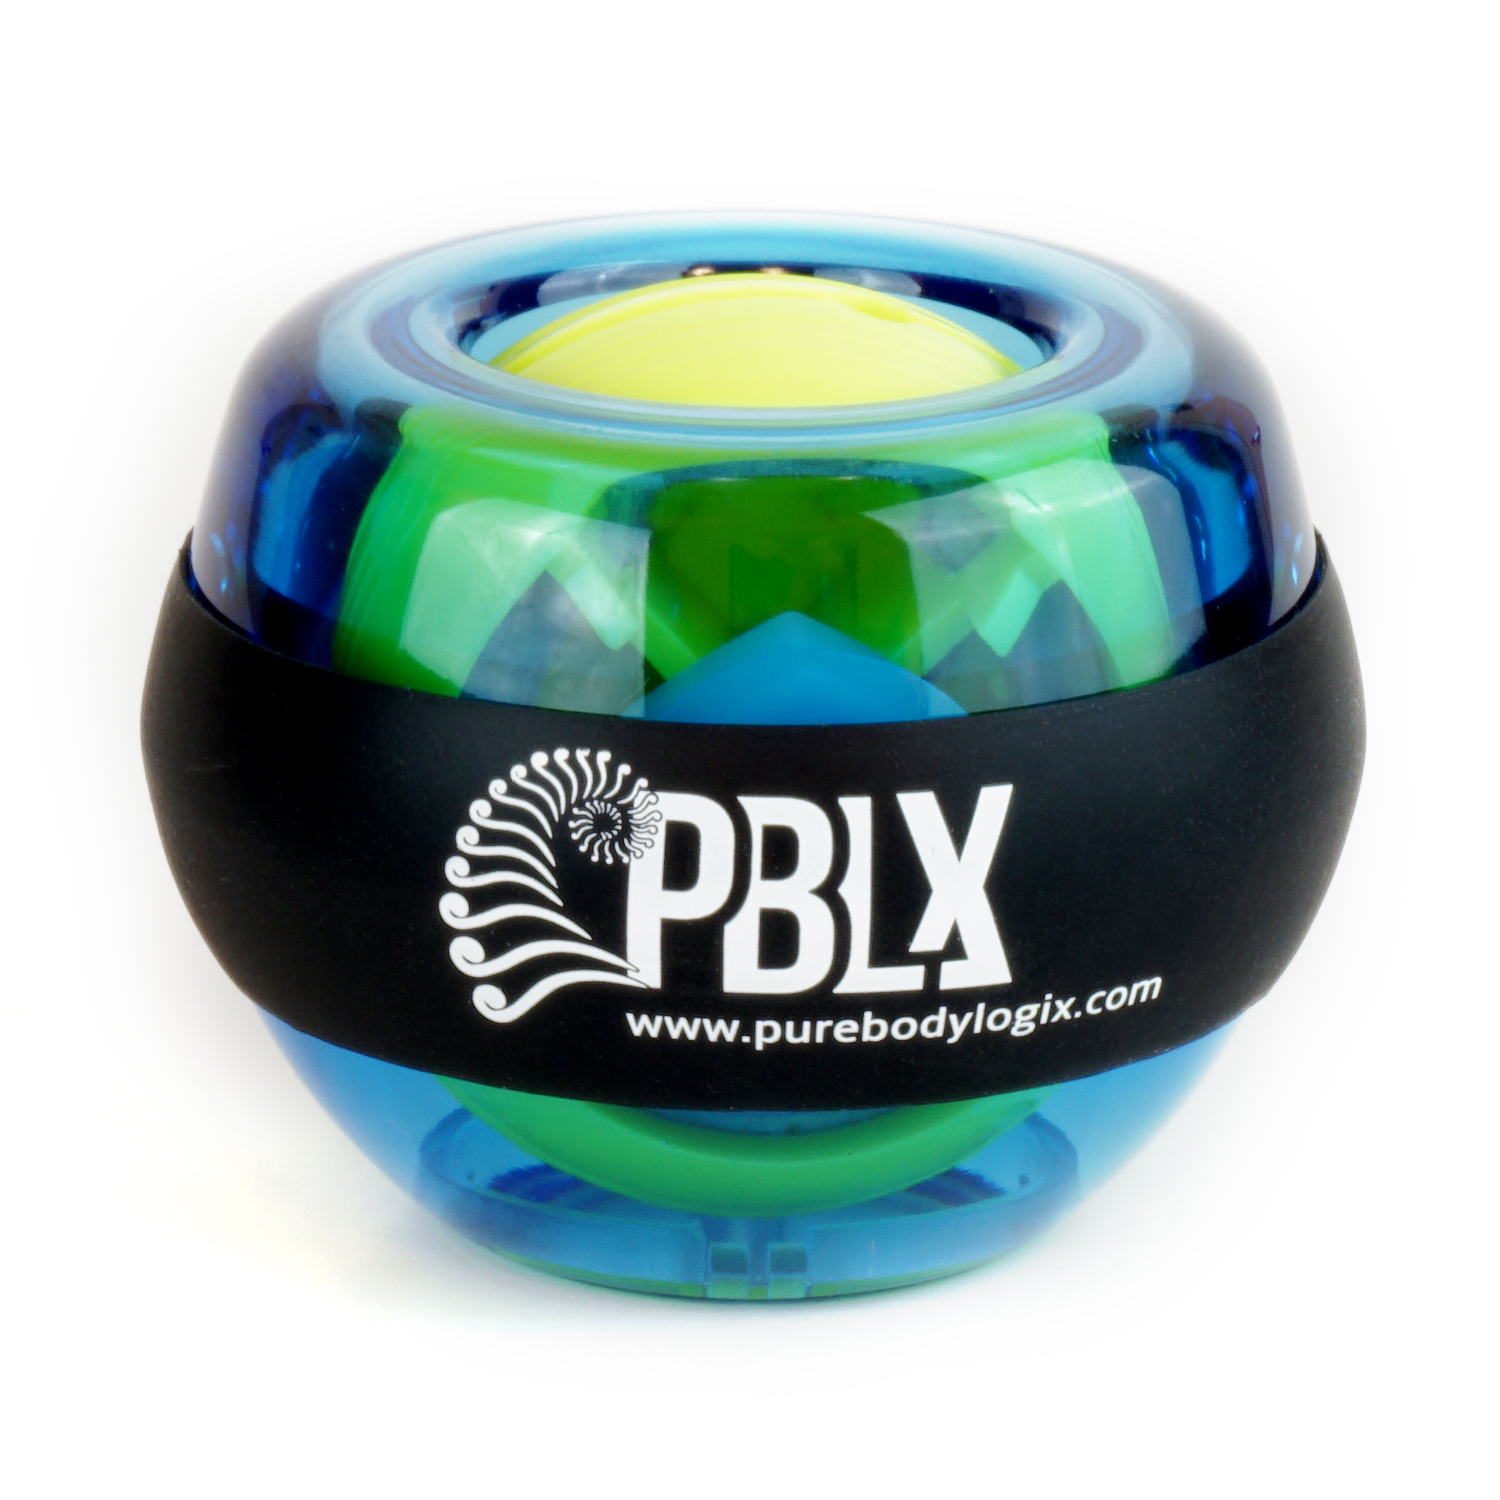 Model: 12091G PBLX Resistance Trainer Platinum Green 45 Lbs 